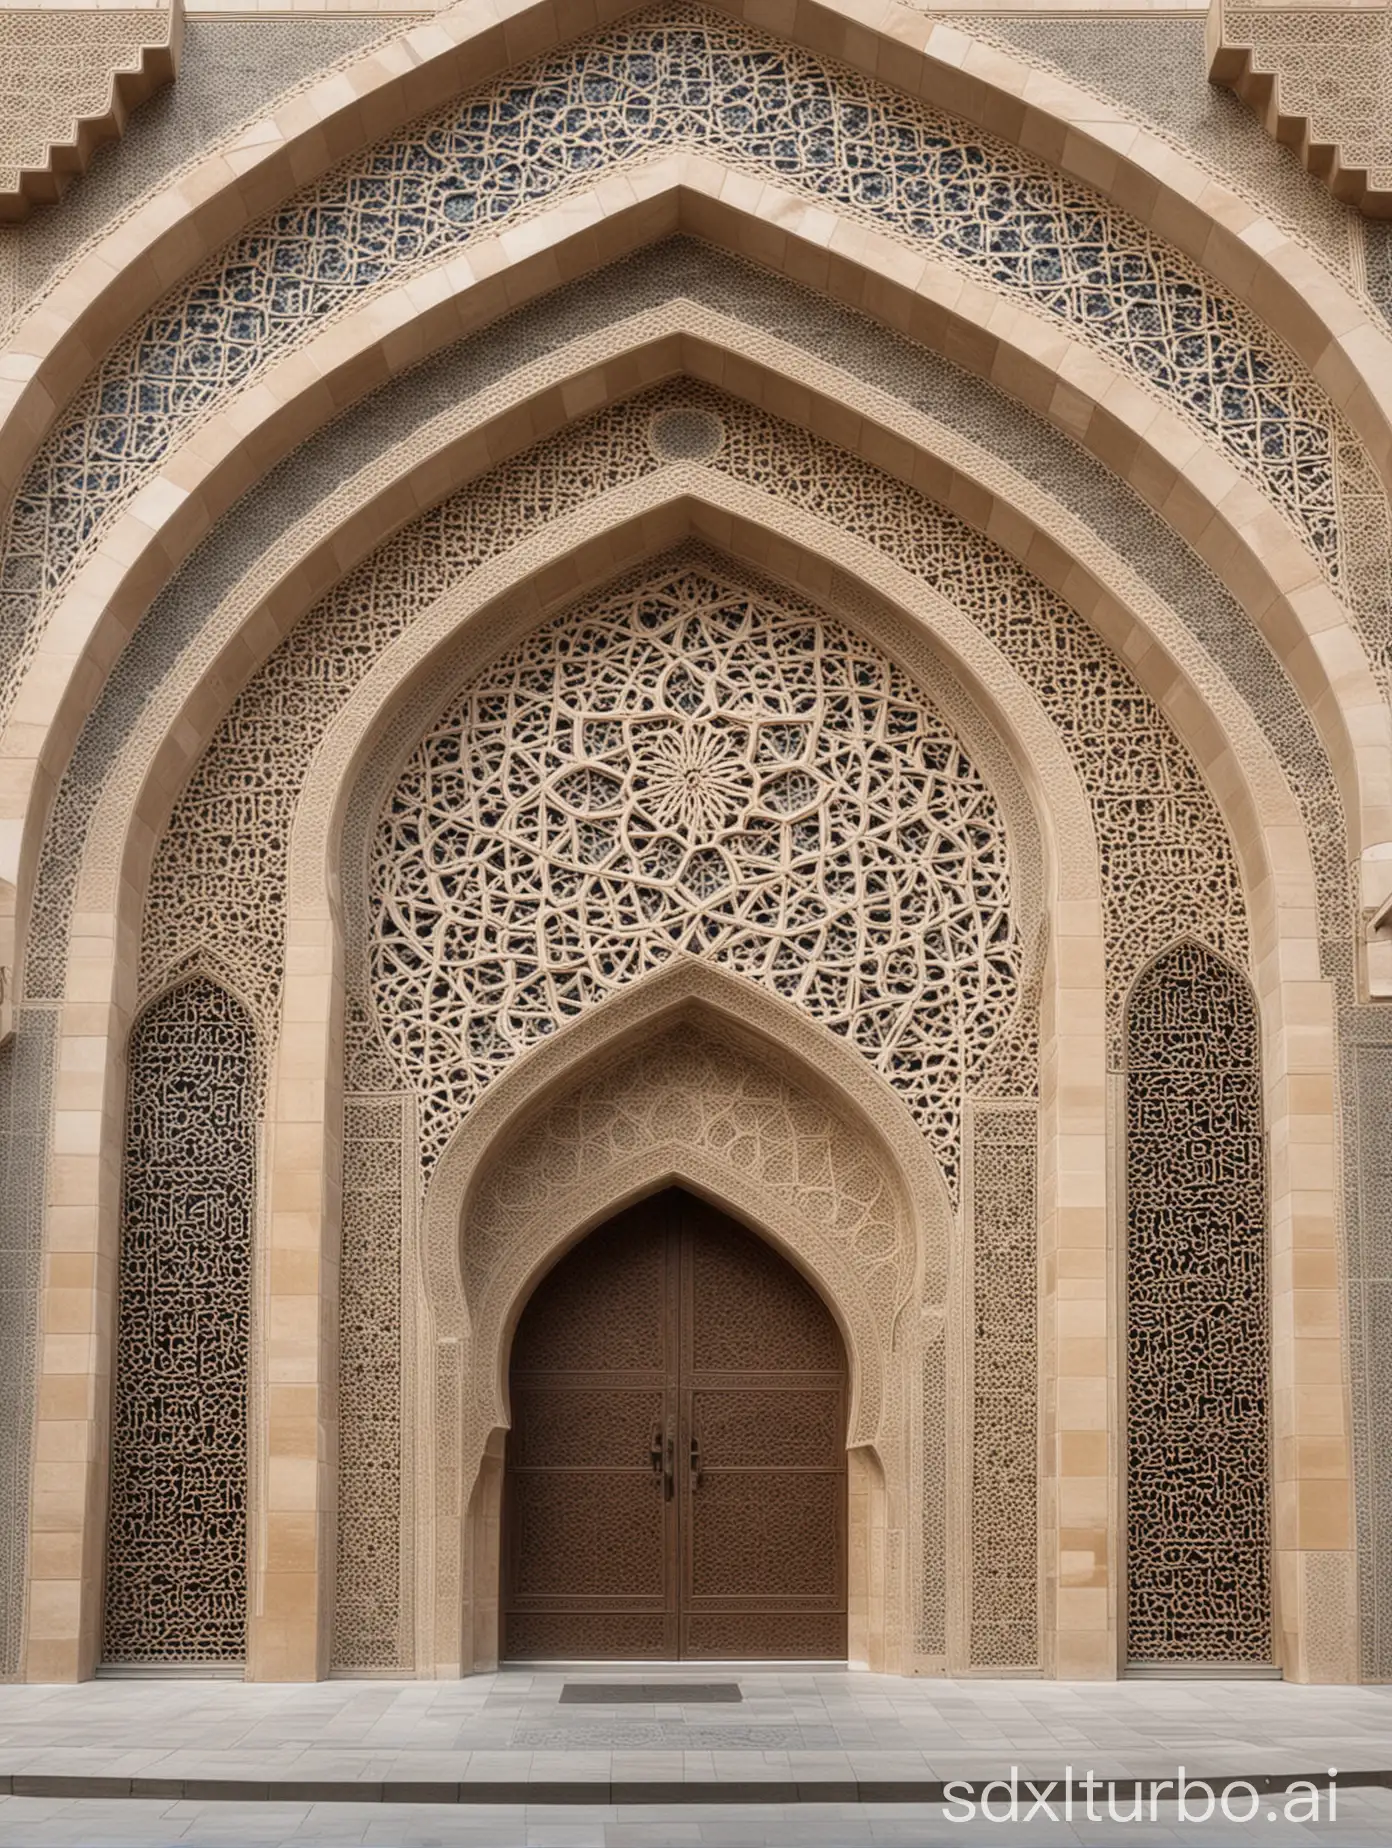 Modern-Building-Facade-with-Islamic-Designs